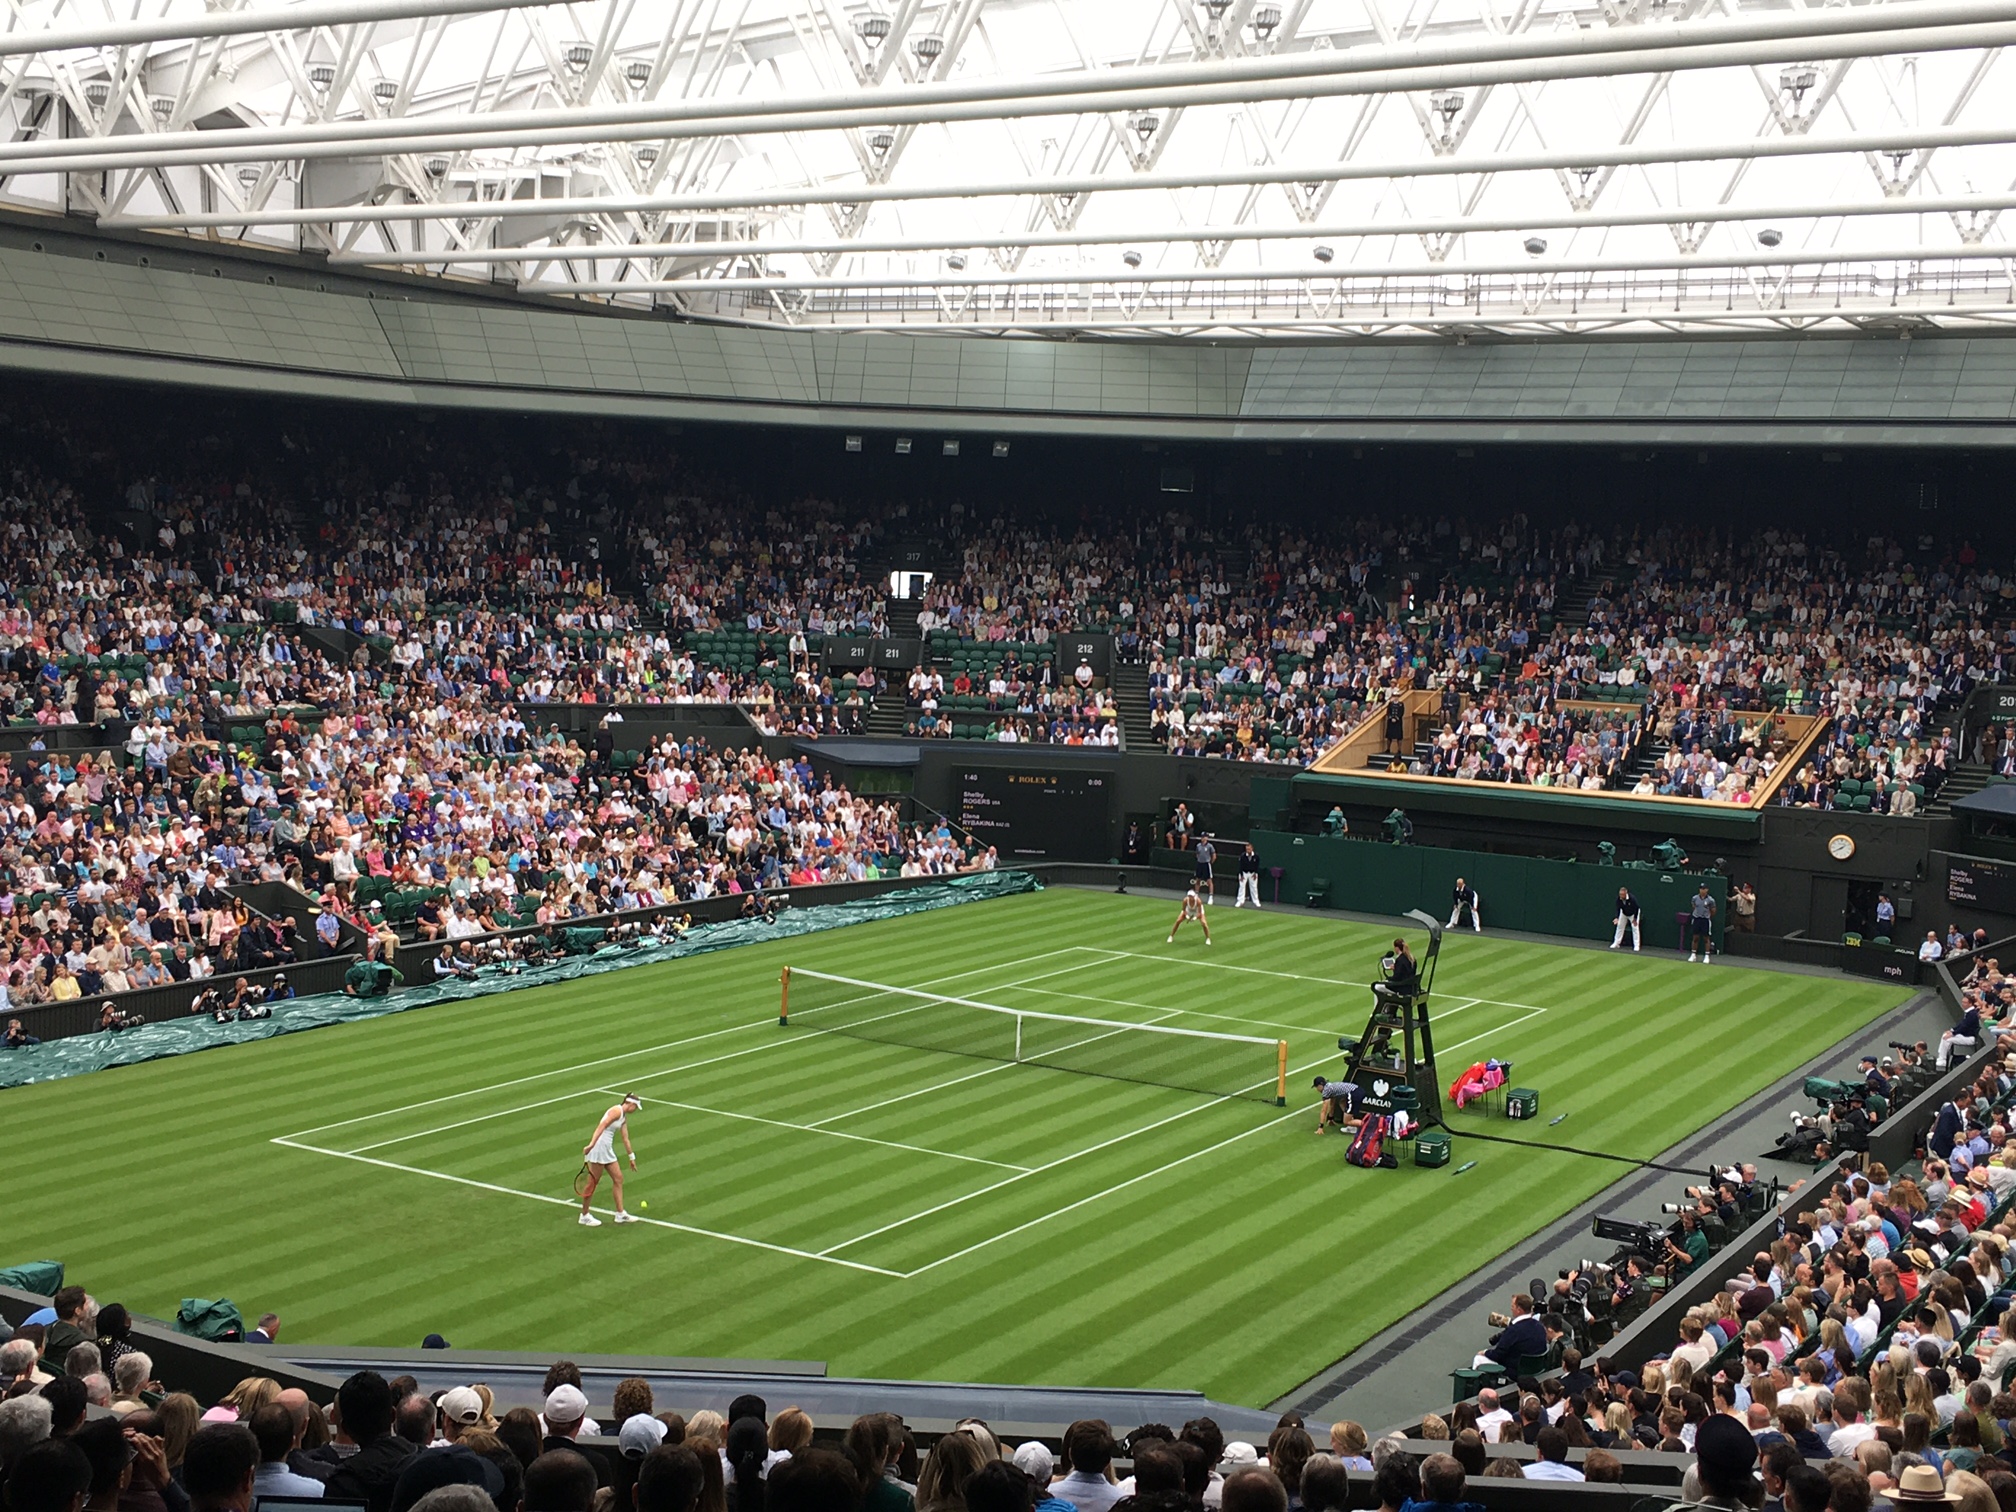 Wimbledon 2023: Rybakina Returns to Centre Court